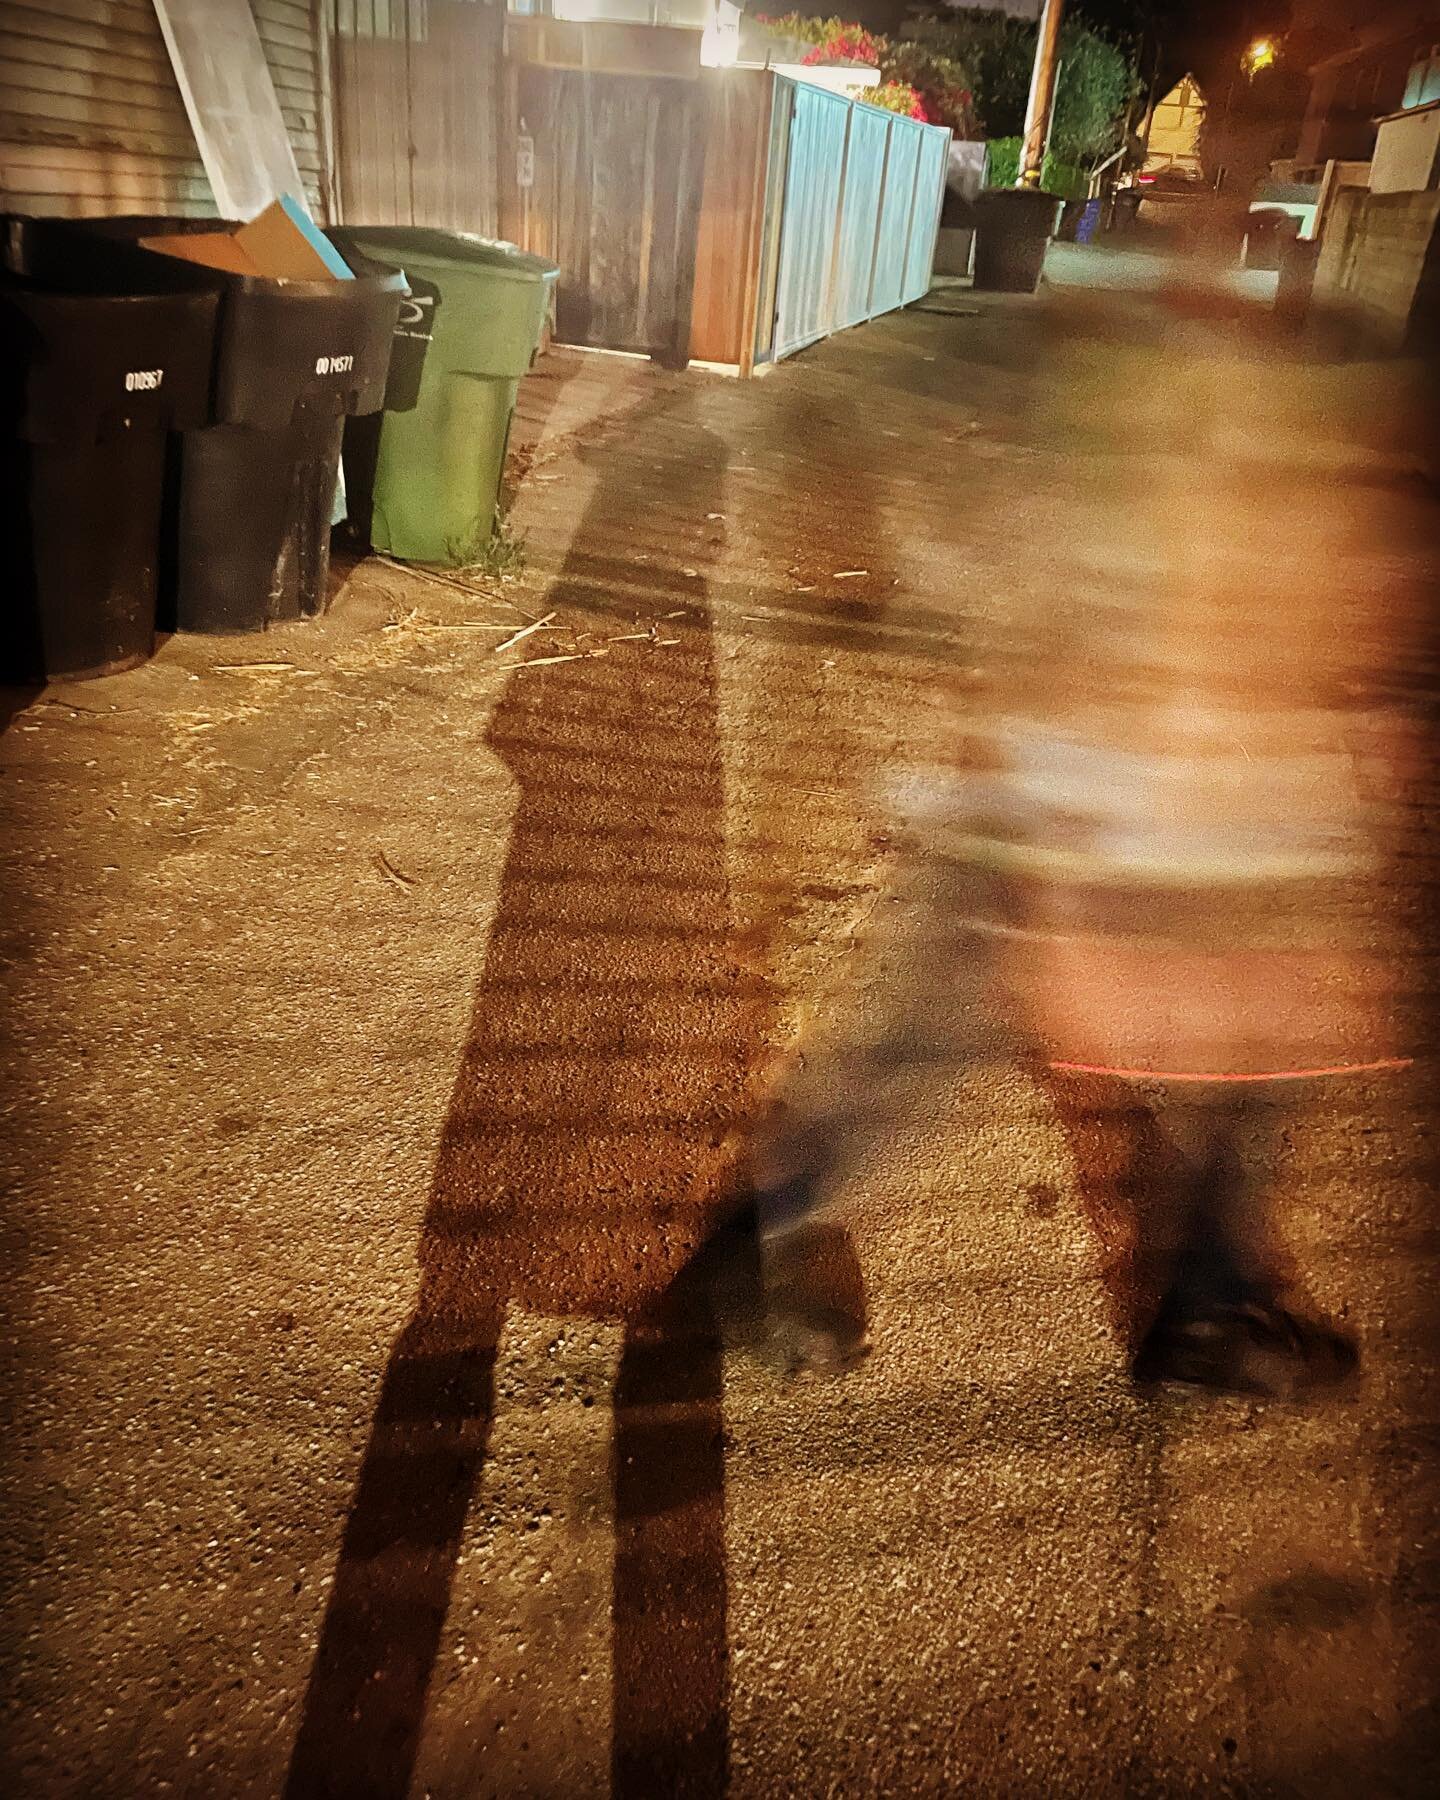 Shadows #michaelivins #michaelandjulia #thelollybombs #lollybombs @mtekbot #jujukeanbeanphotography #alleycats